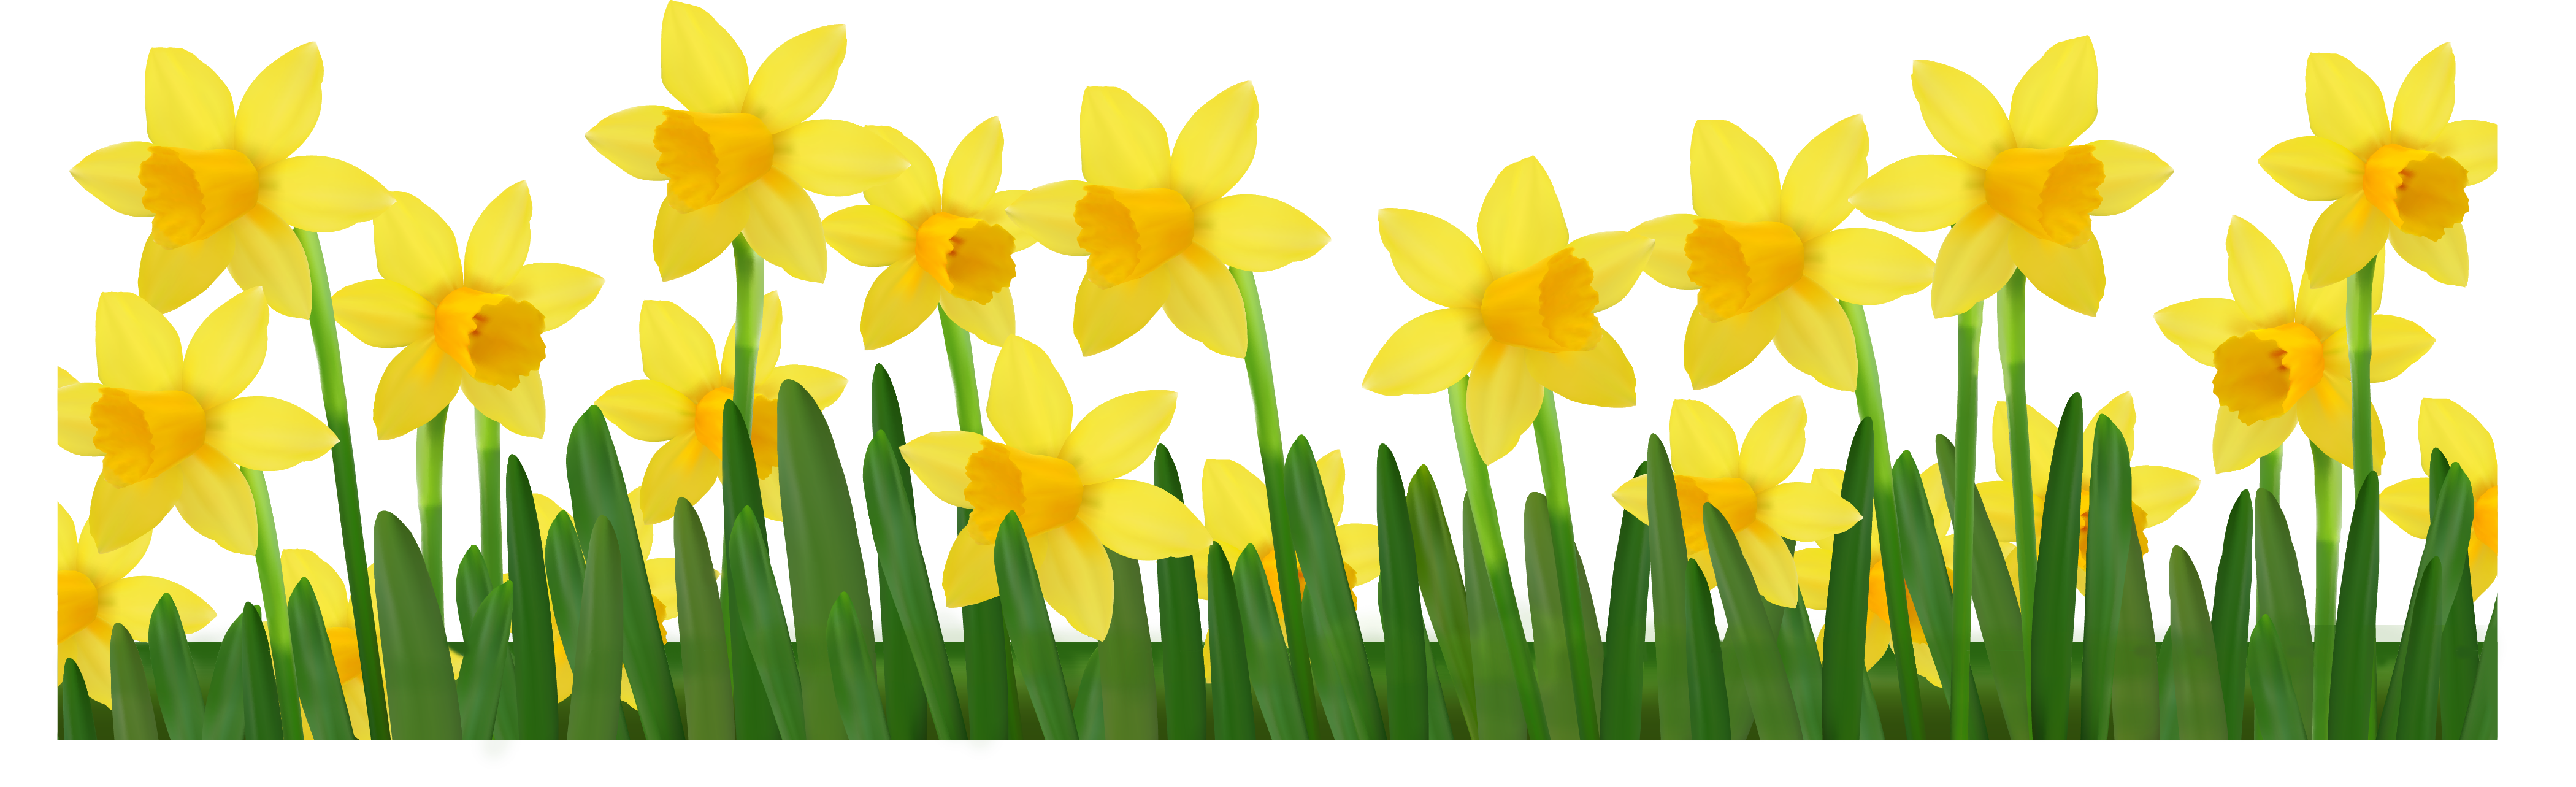 daffodil flower clip art free - photo #12